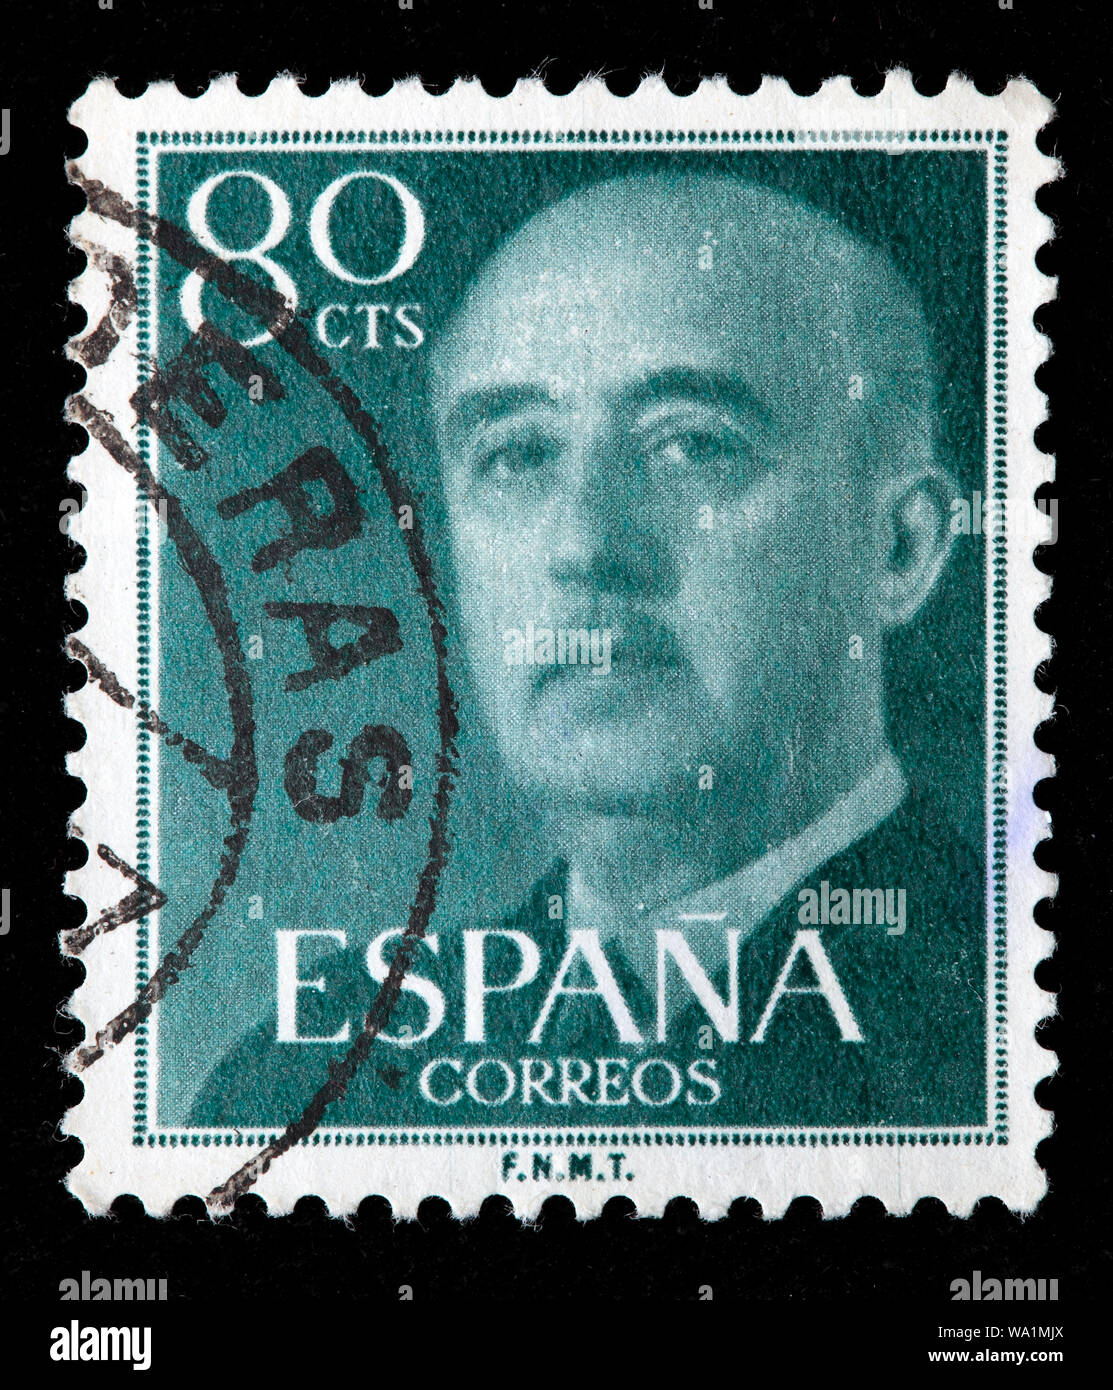 Francisco Franco Bahamonde (1892-1975), Spanish general, politician, Head of State, dictator, Caudillo, postage stamp, Spain, 1955 Stock Photo